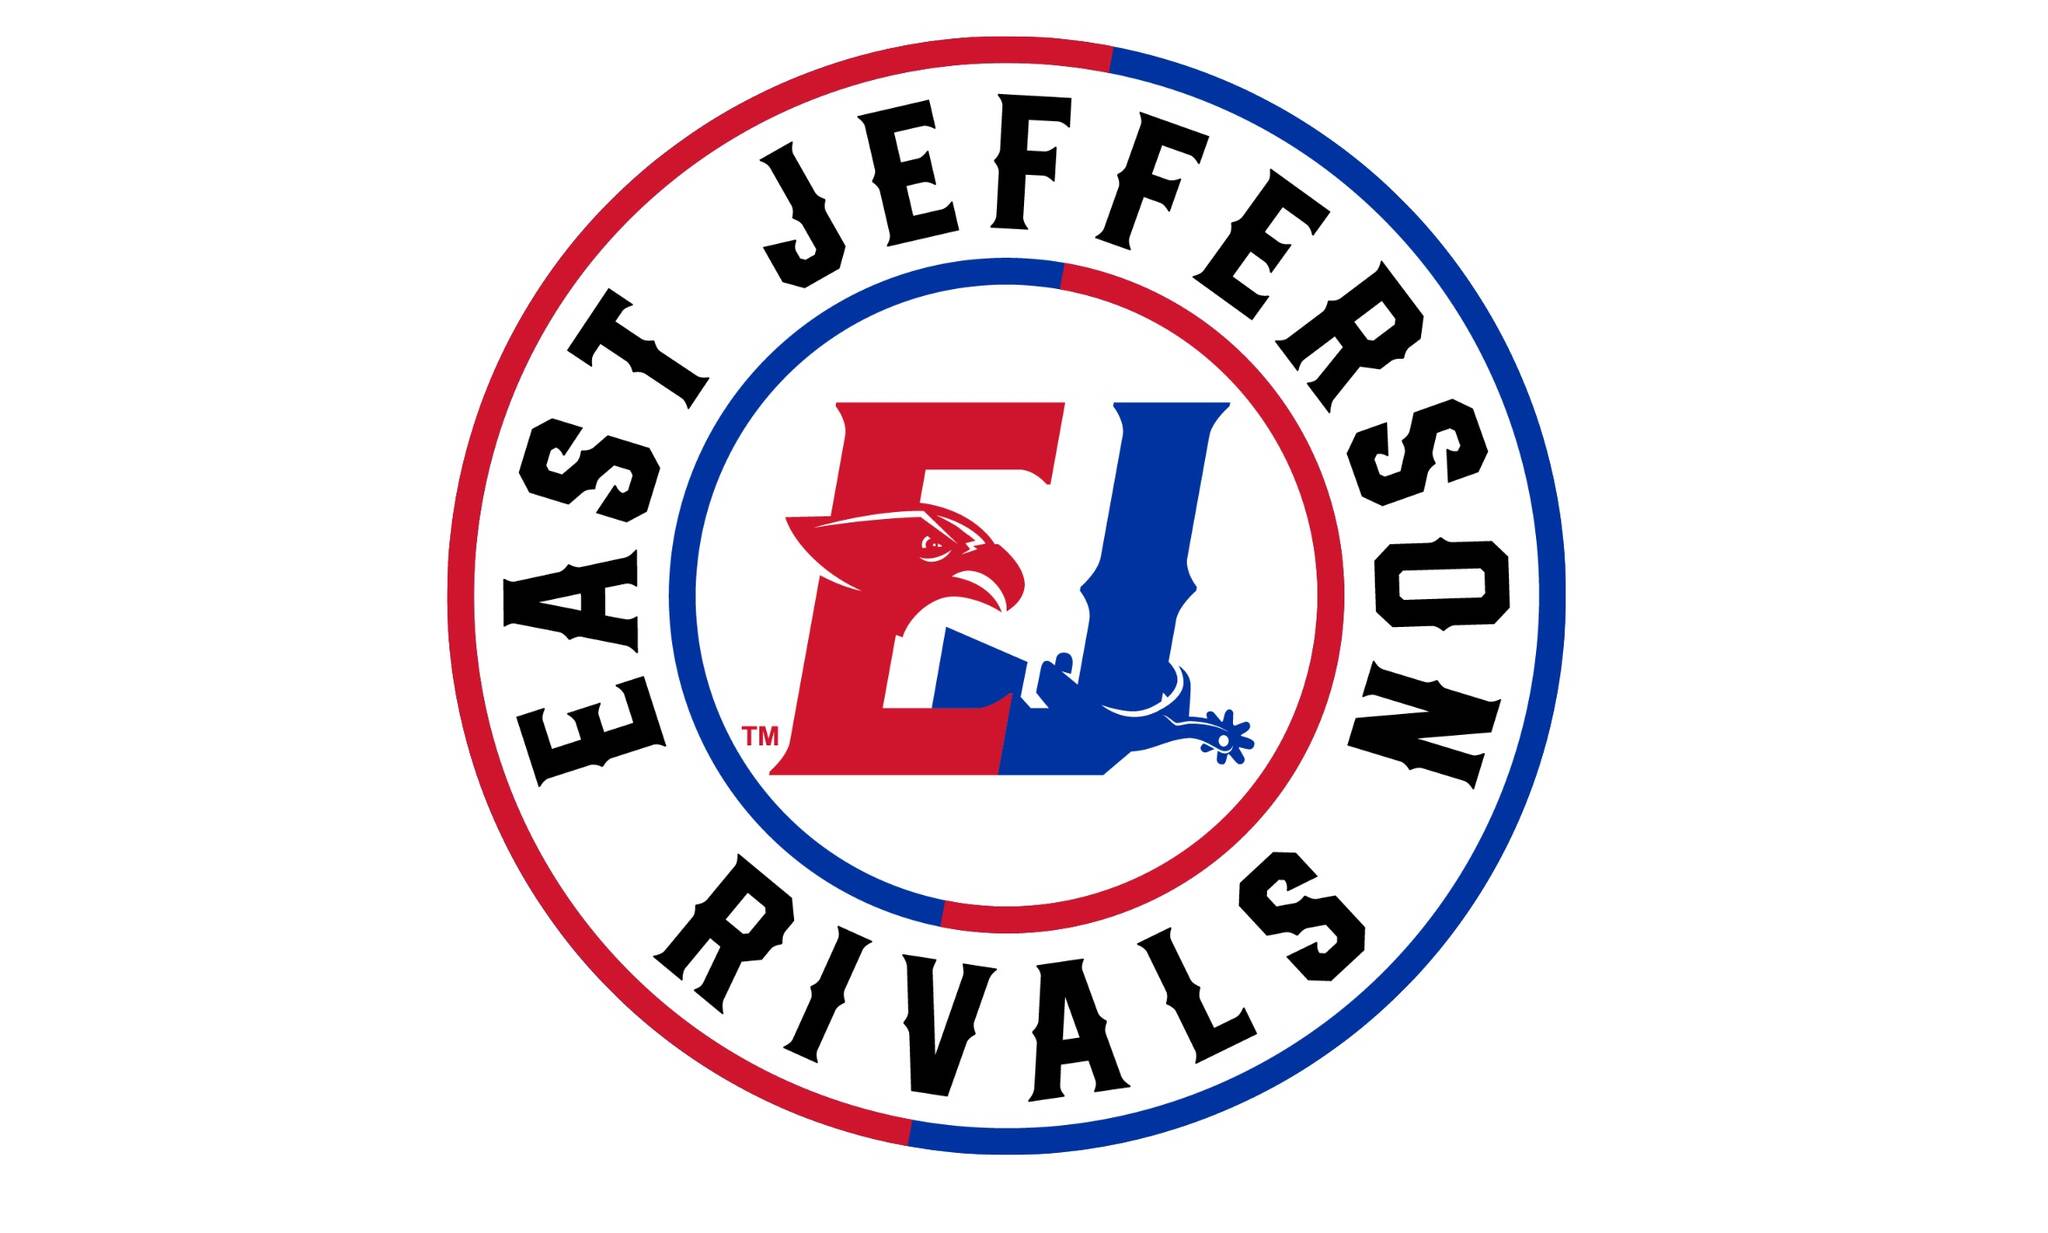 East Jefferson rivals